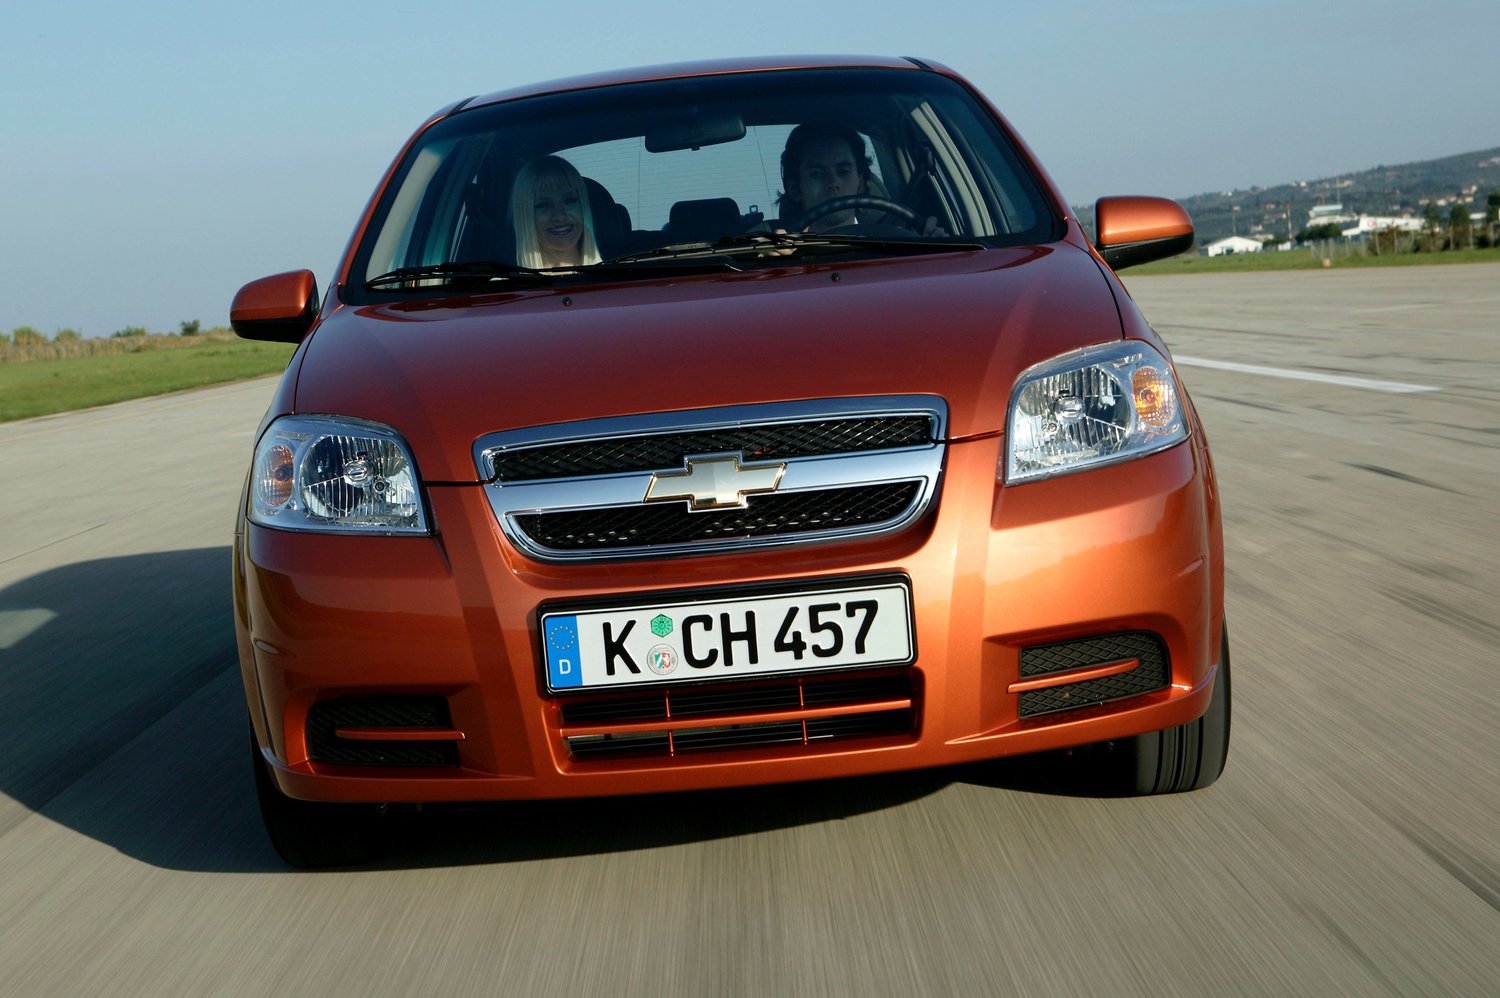 седан Chevrolet Aveo 2006 - 2012г выпуска модификация 1.2 MT (72 л.с.)